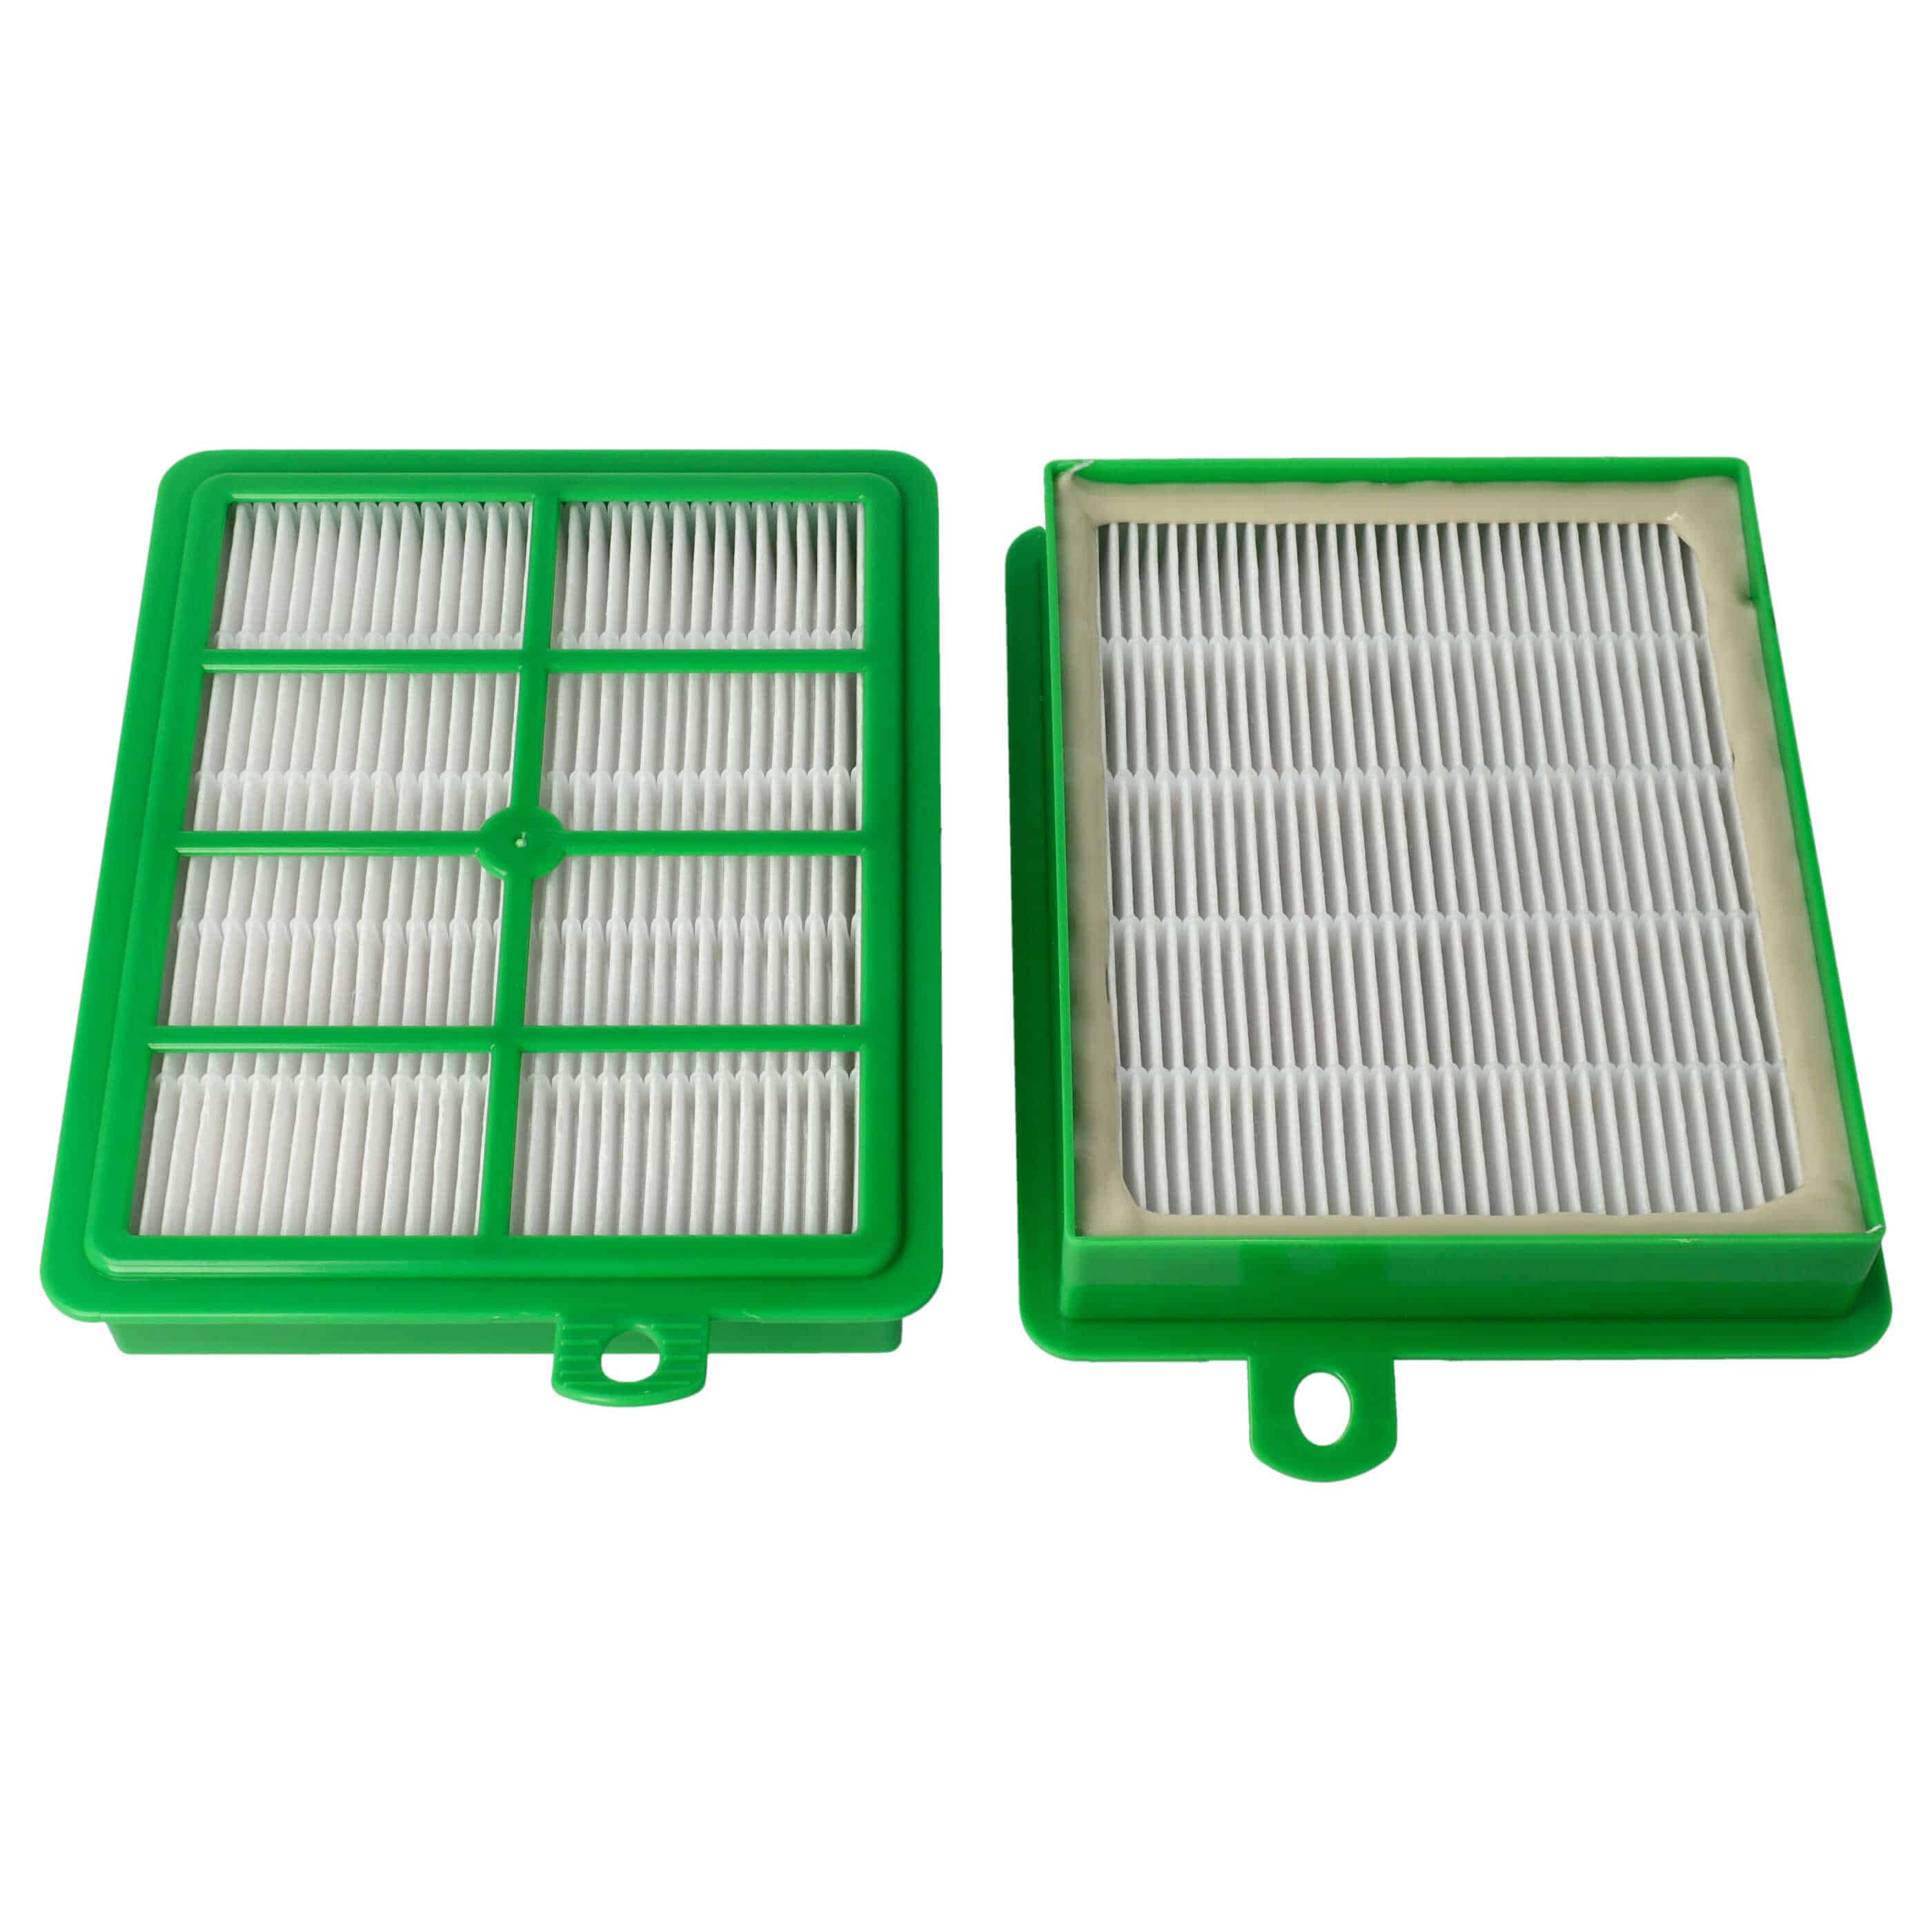 2x Filtro reemplaza AEG ASF1W, AFS1, E 12, AFS1W, AEFG12W para aspiradora - filtro Hepa blanco / verde